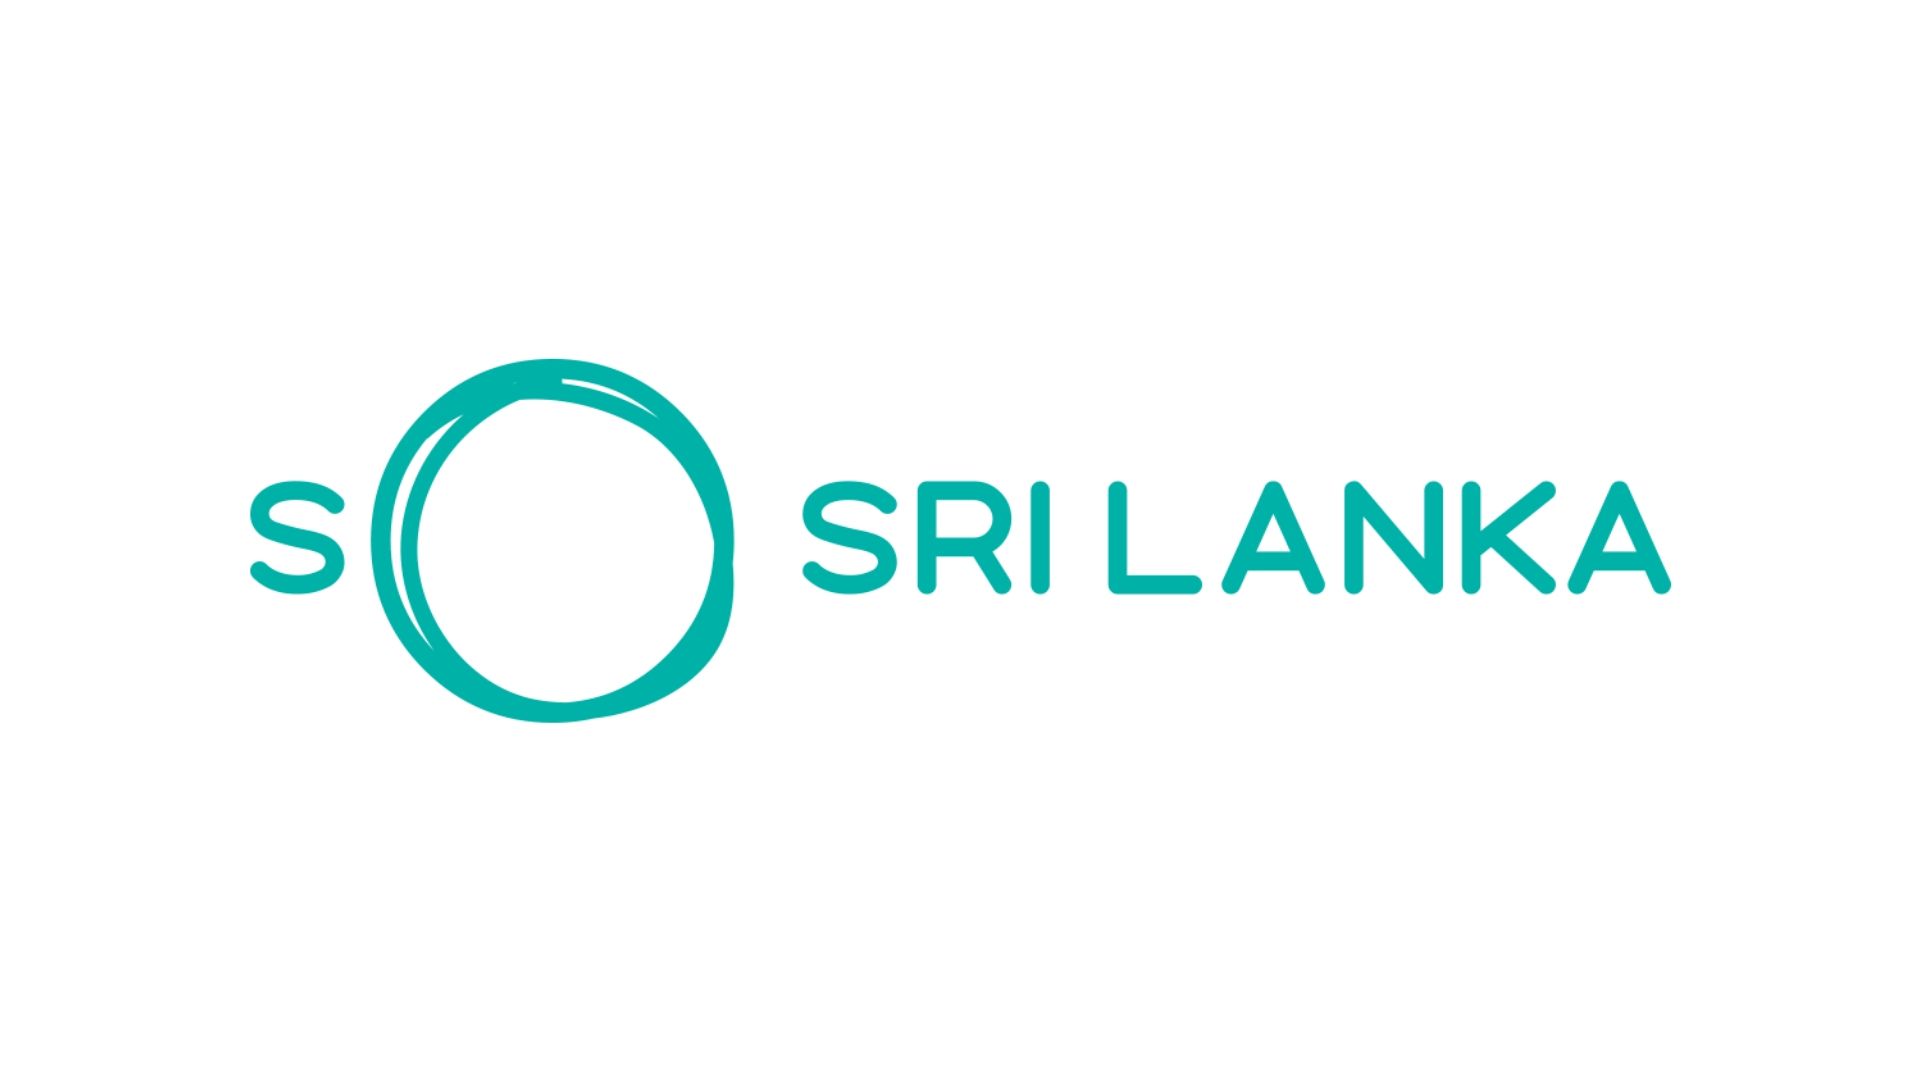 So Sri Lanka logo